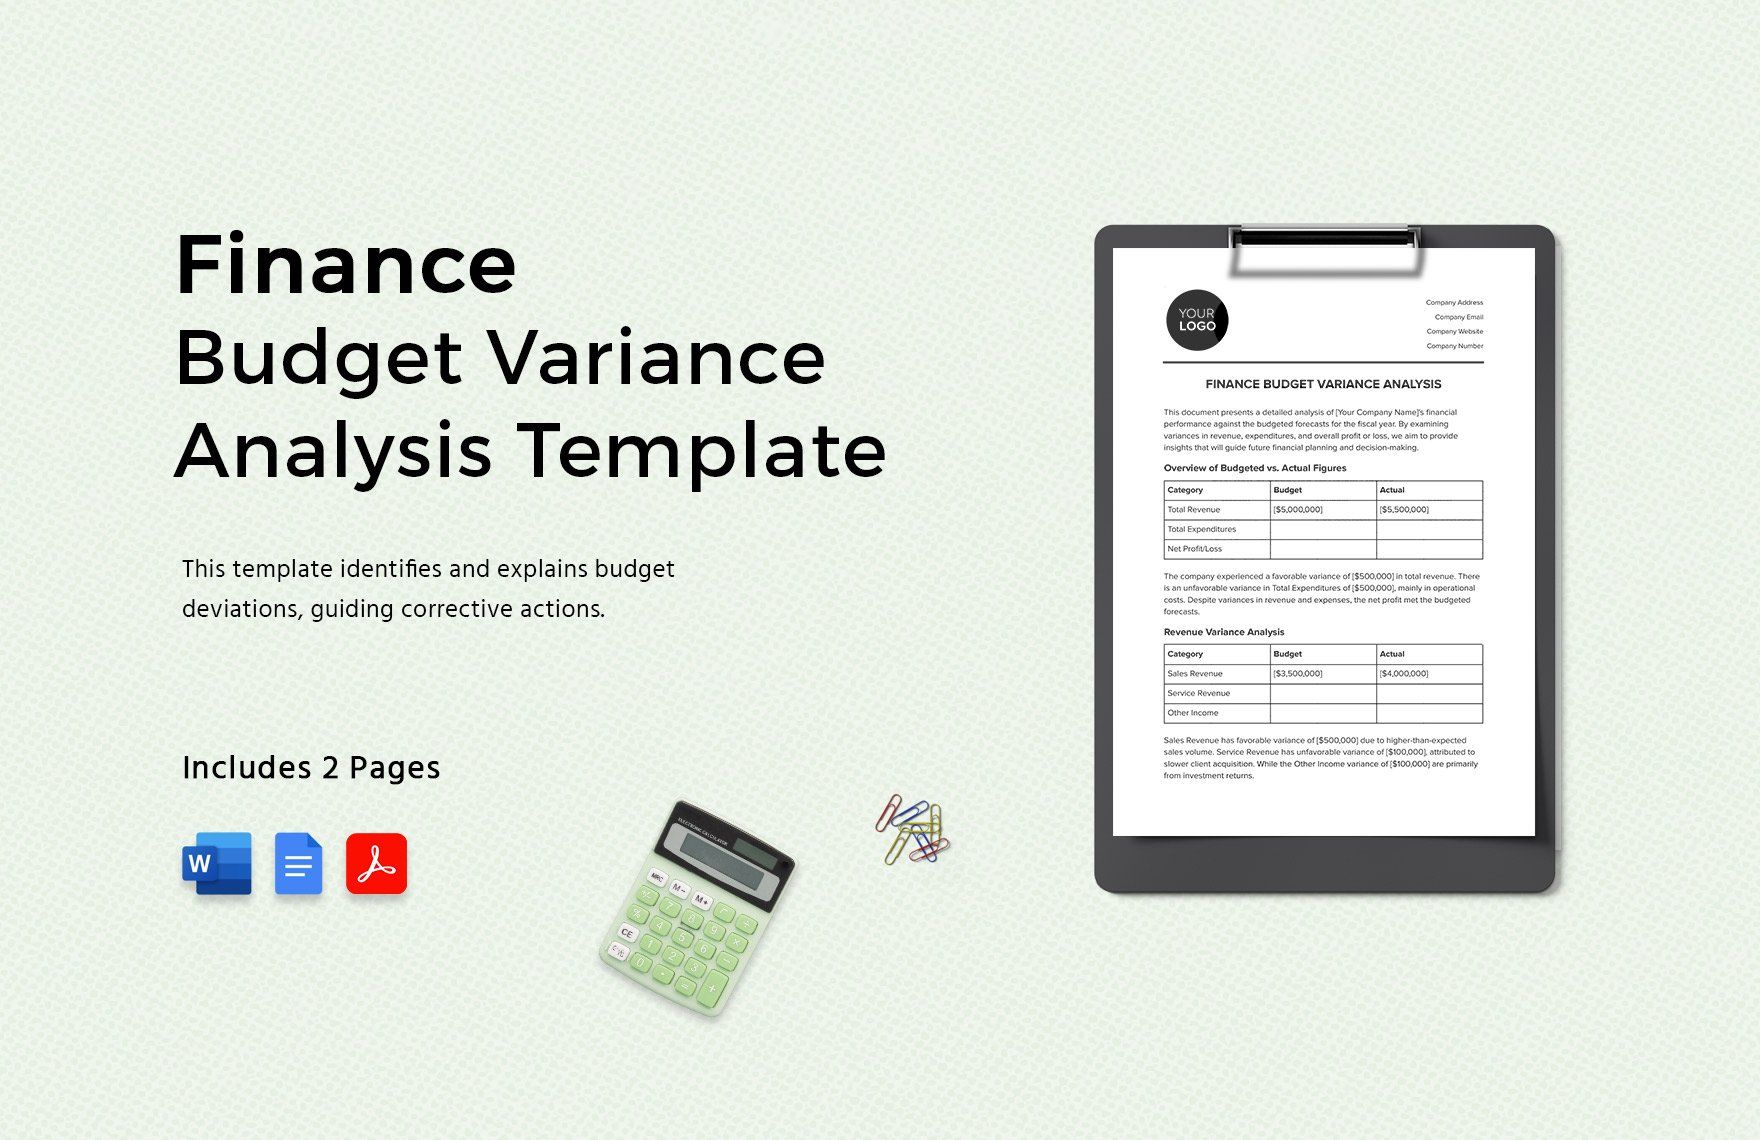 Finance Budget Variance Analysis Template